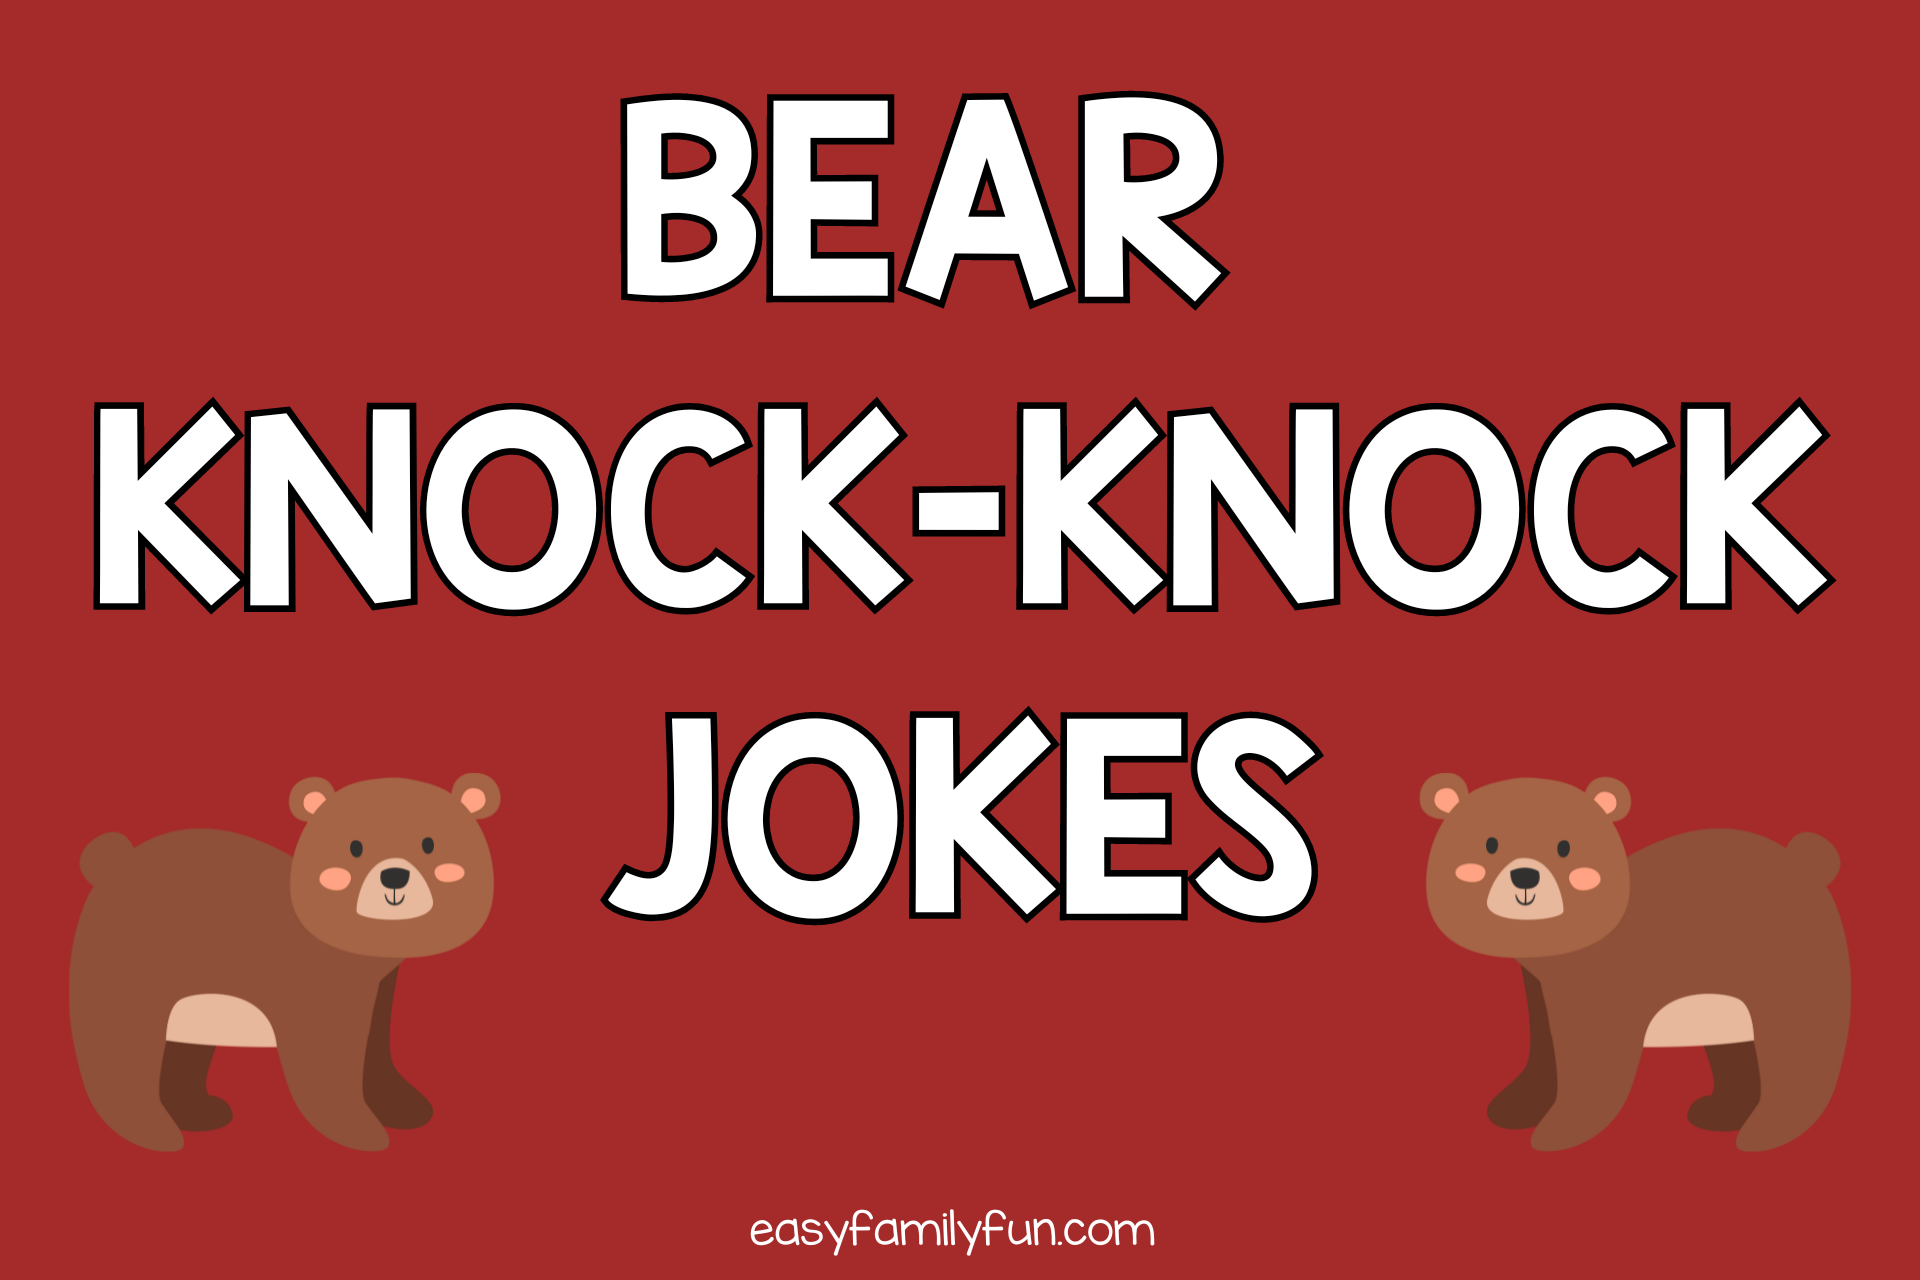 Bear knock knock jokes